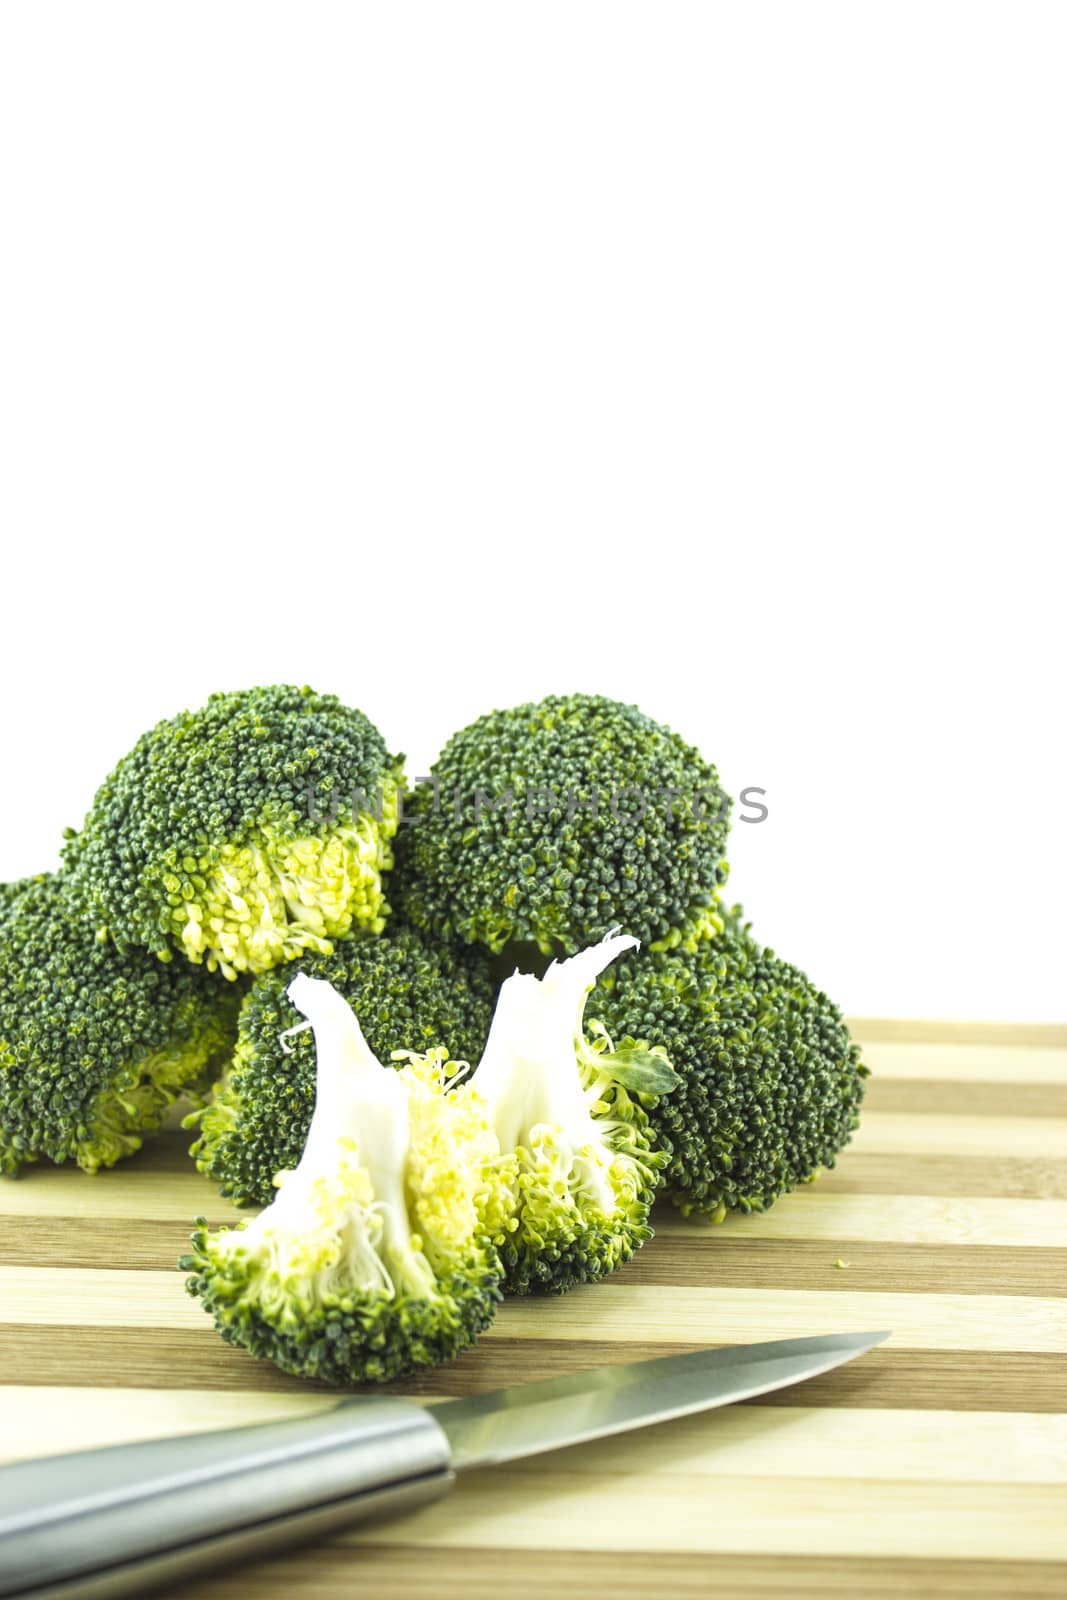 Fresh broccoli on wood with knife.